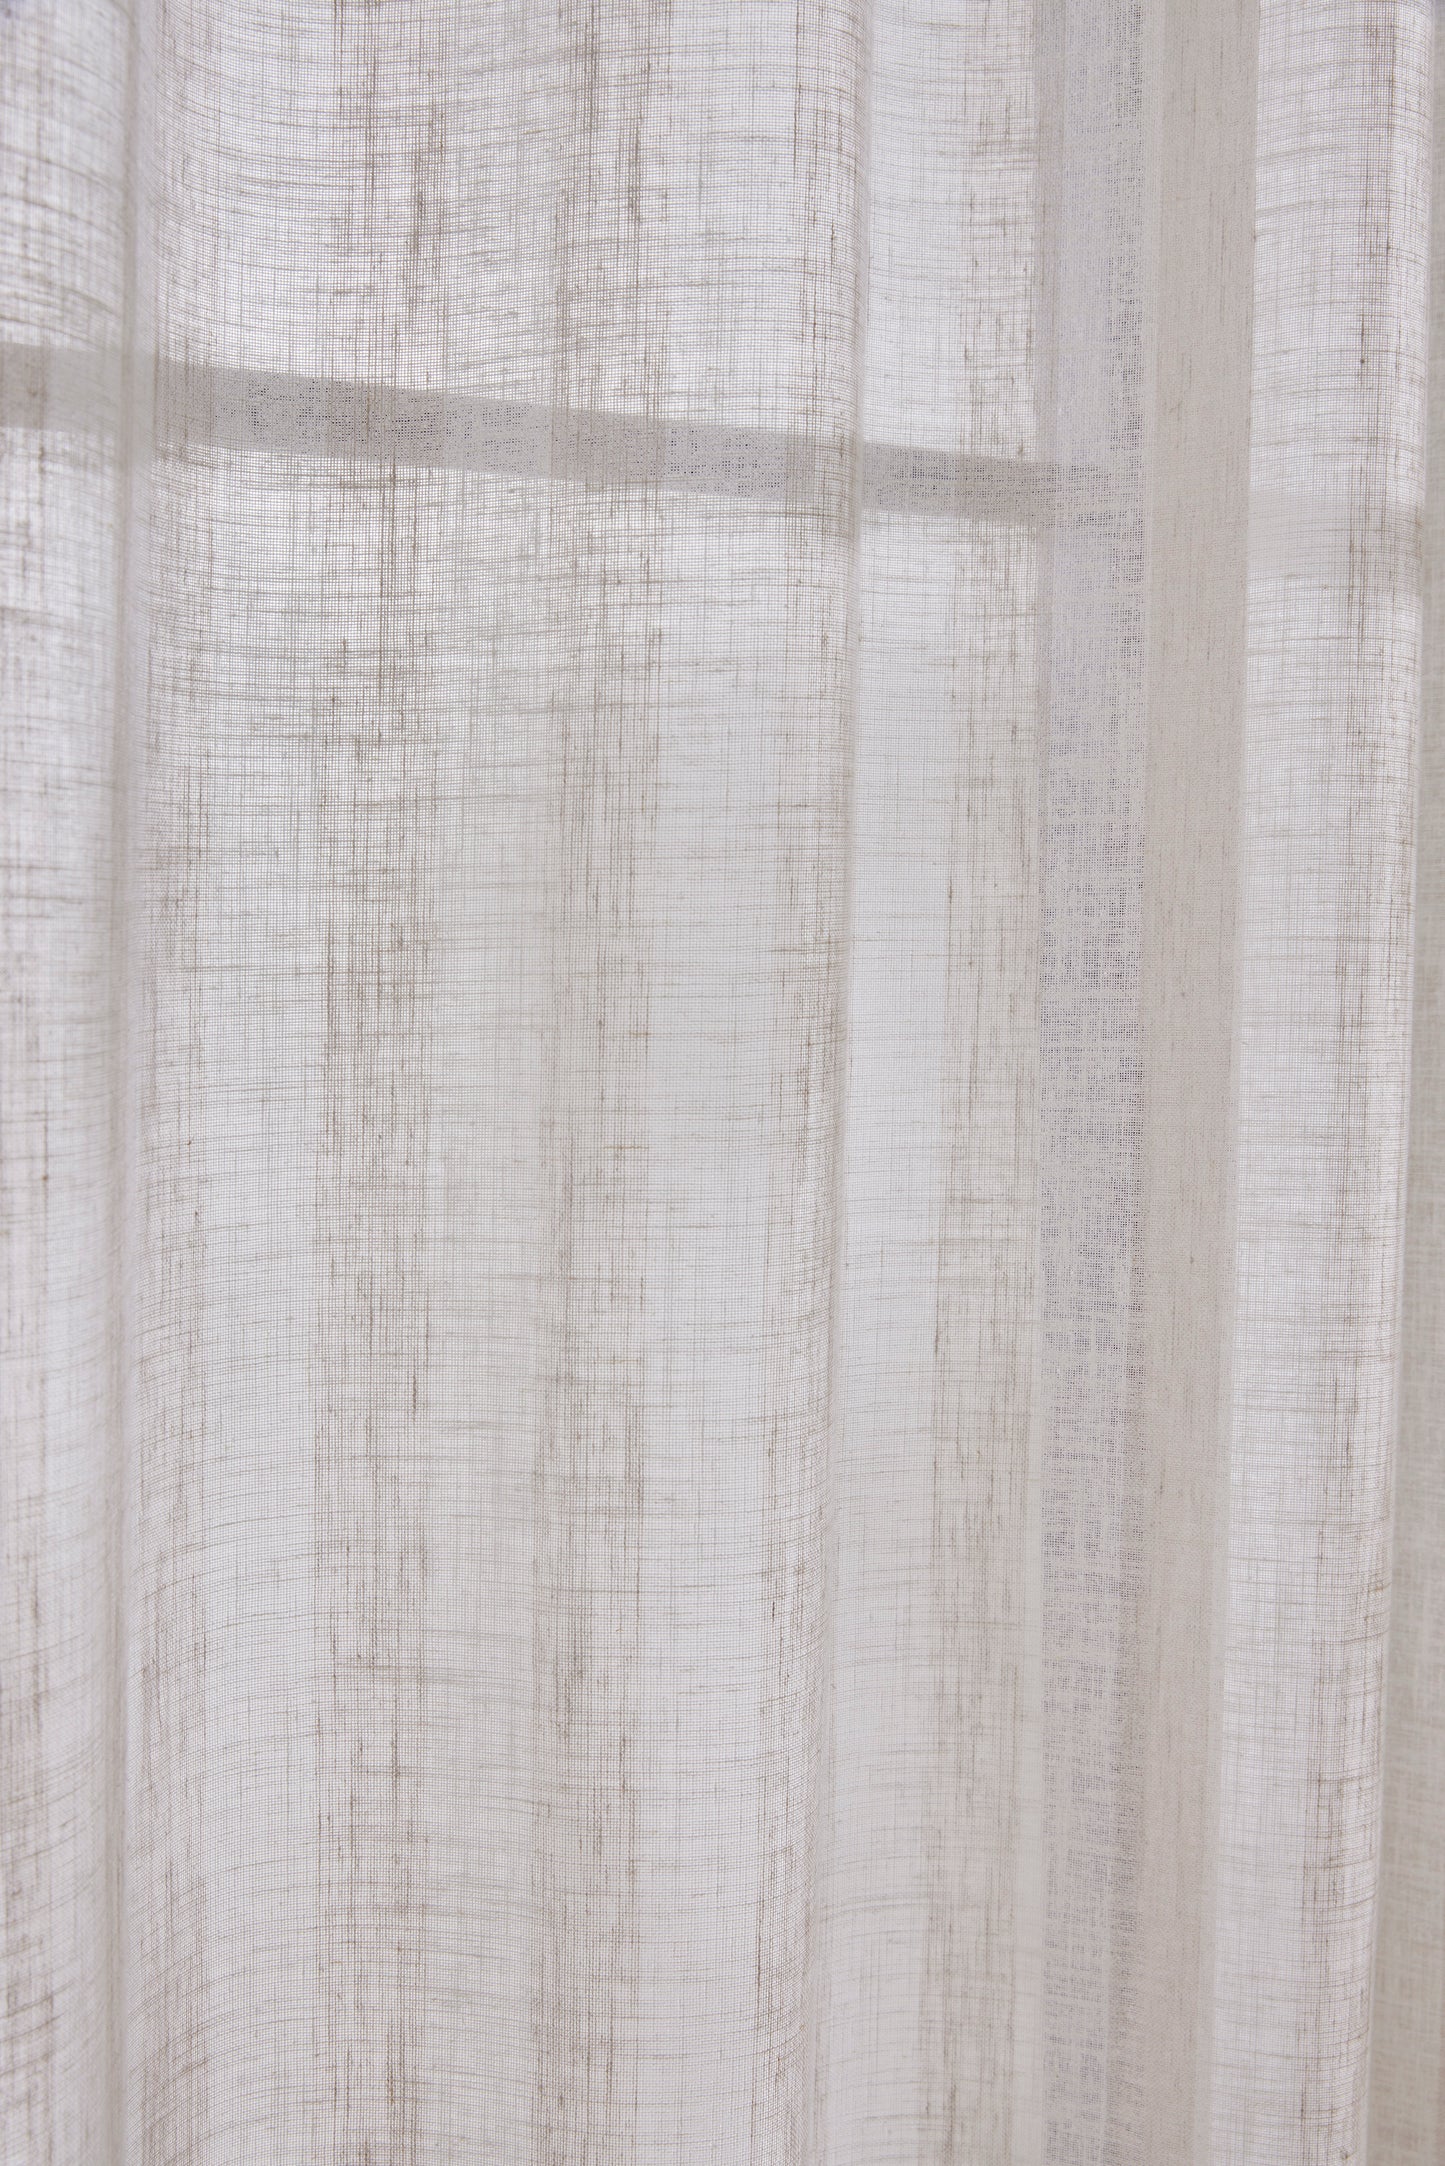 Stripe Linen Sheer Curtains